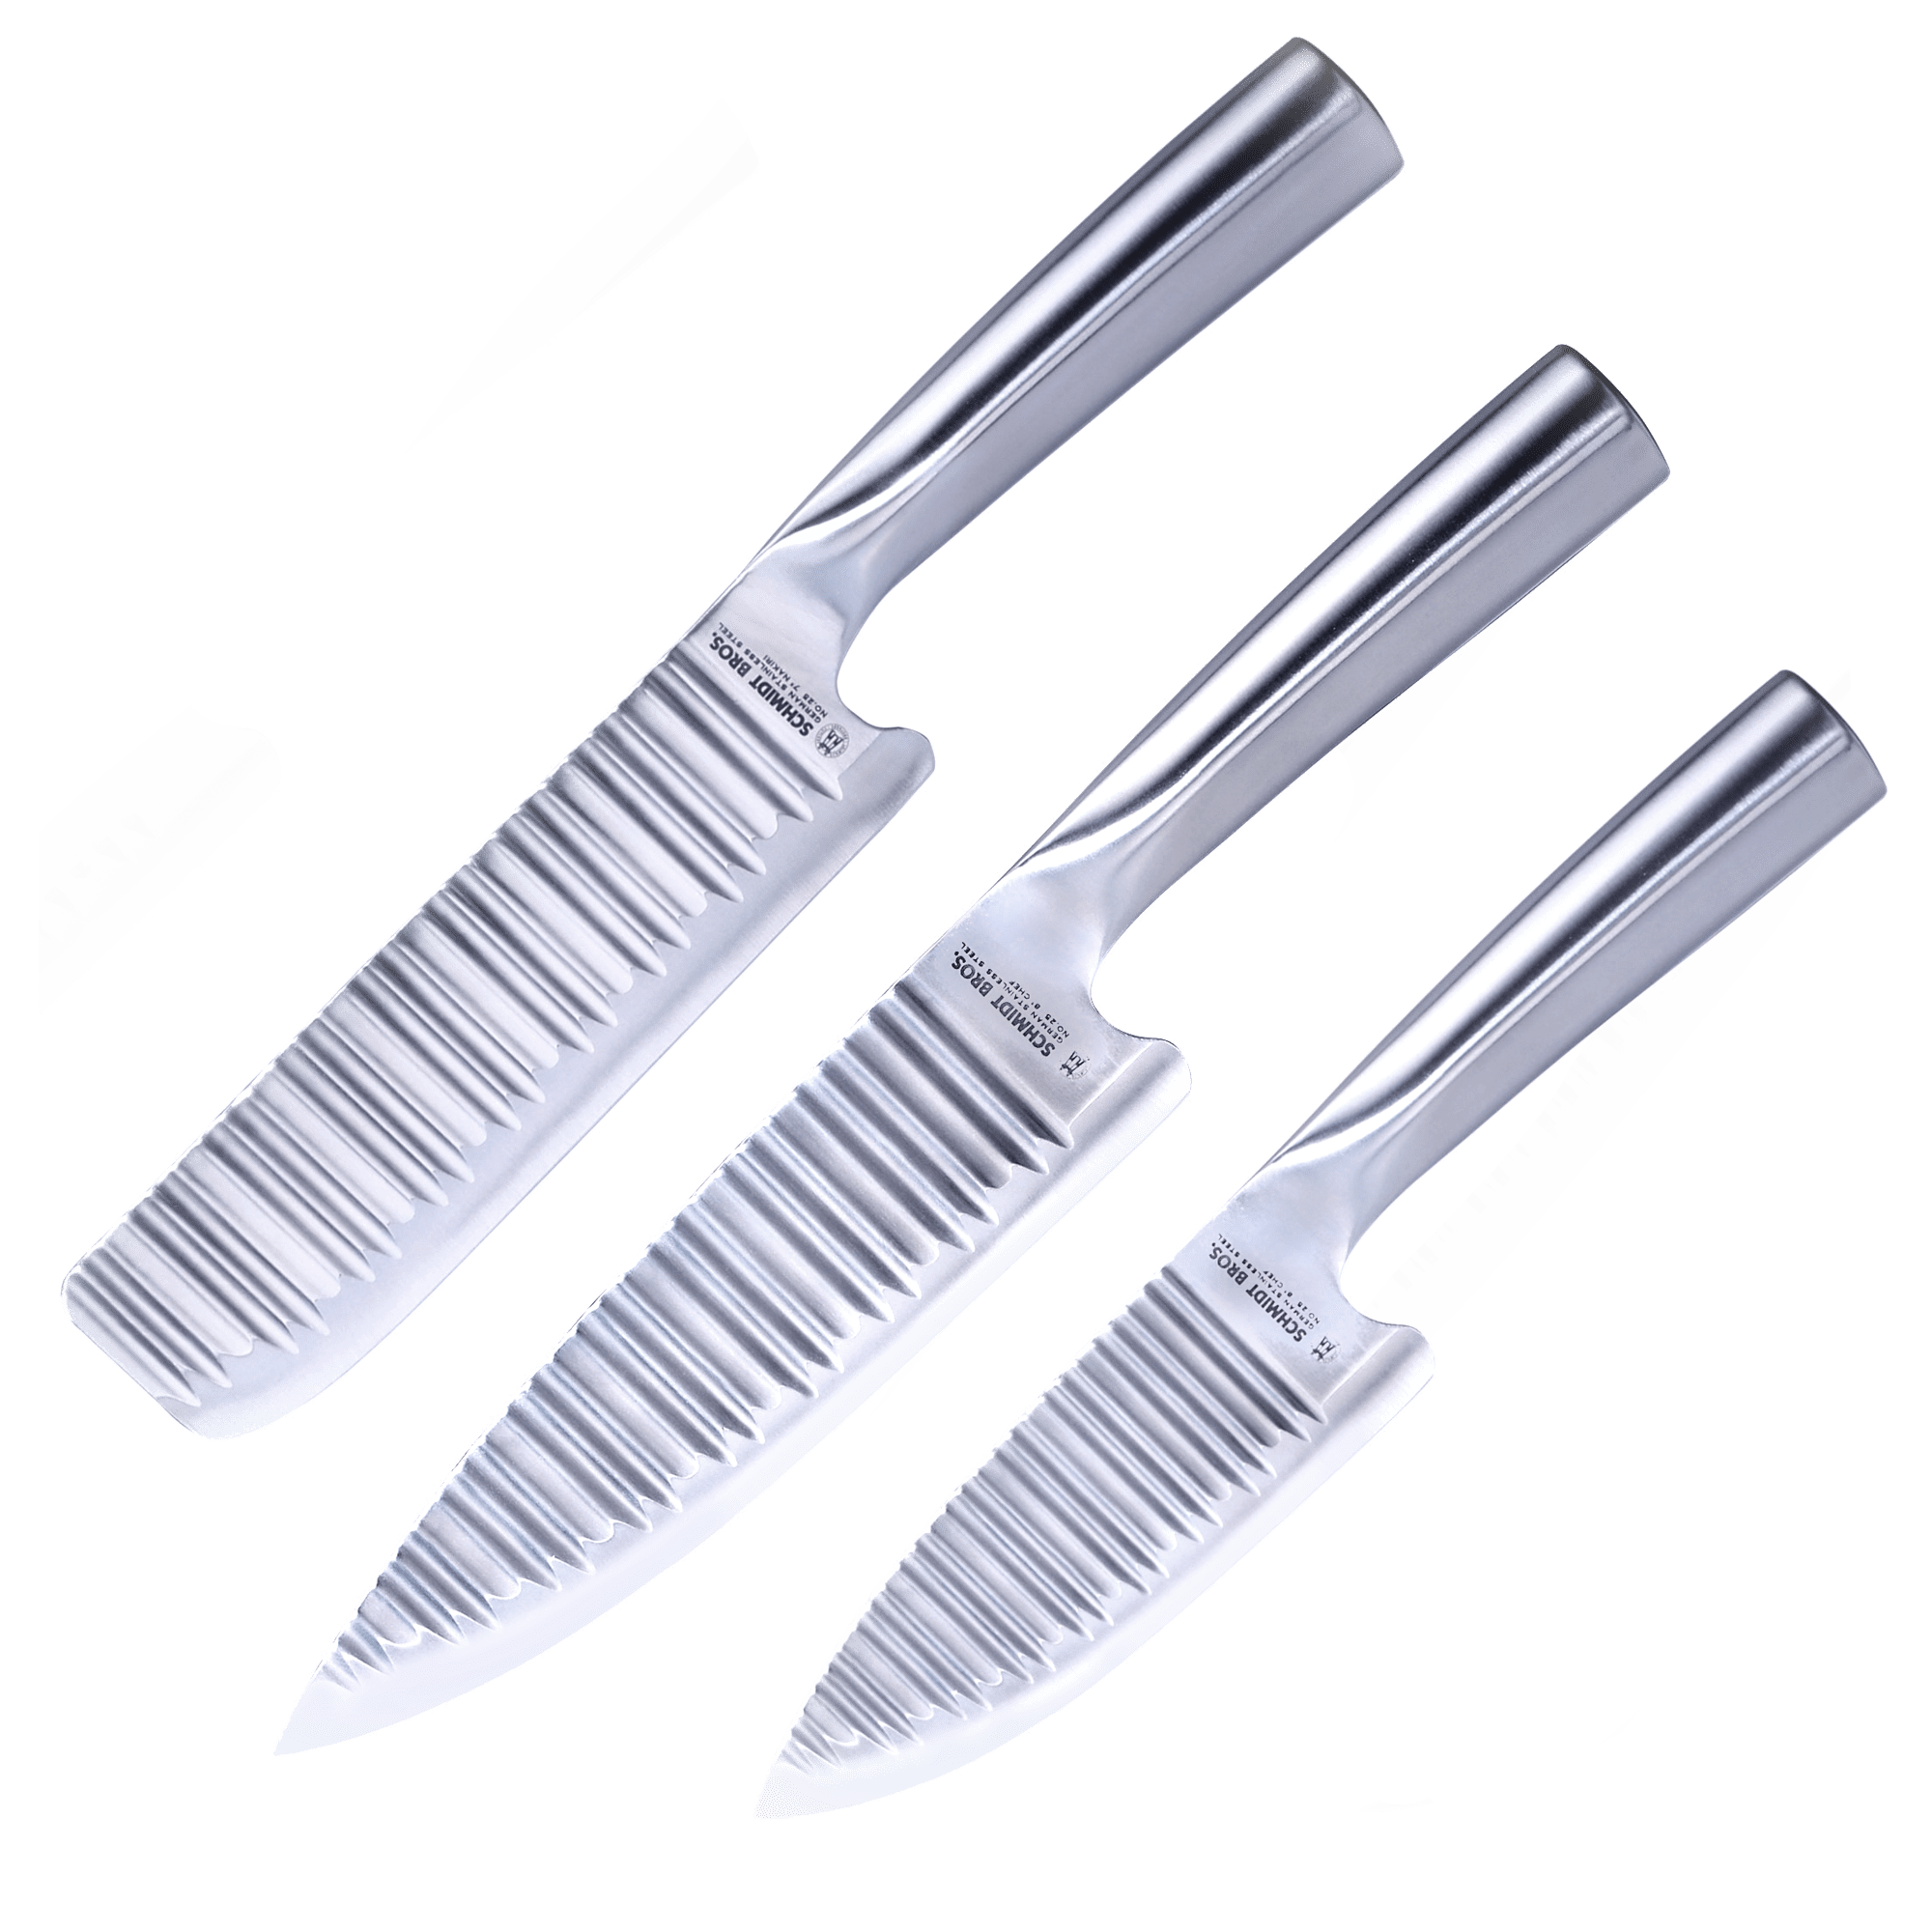 The Knife Set